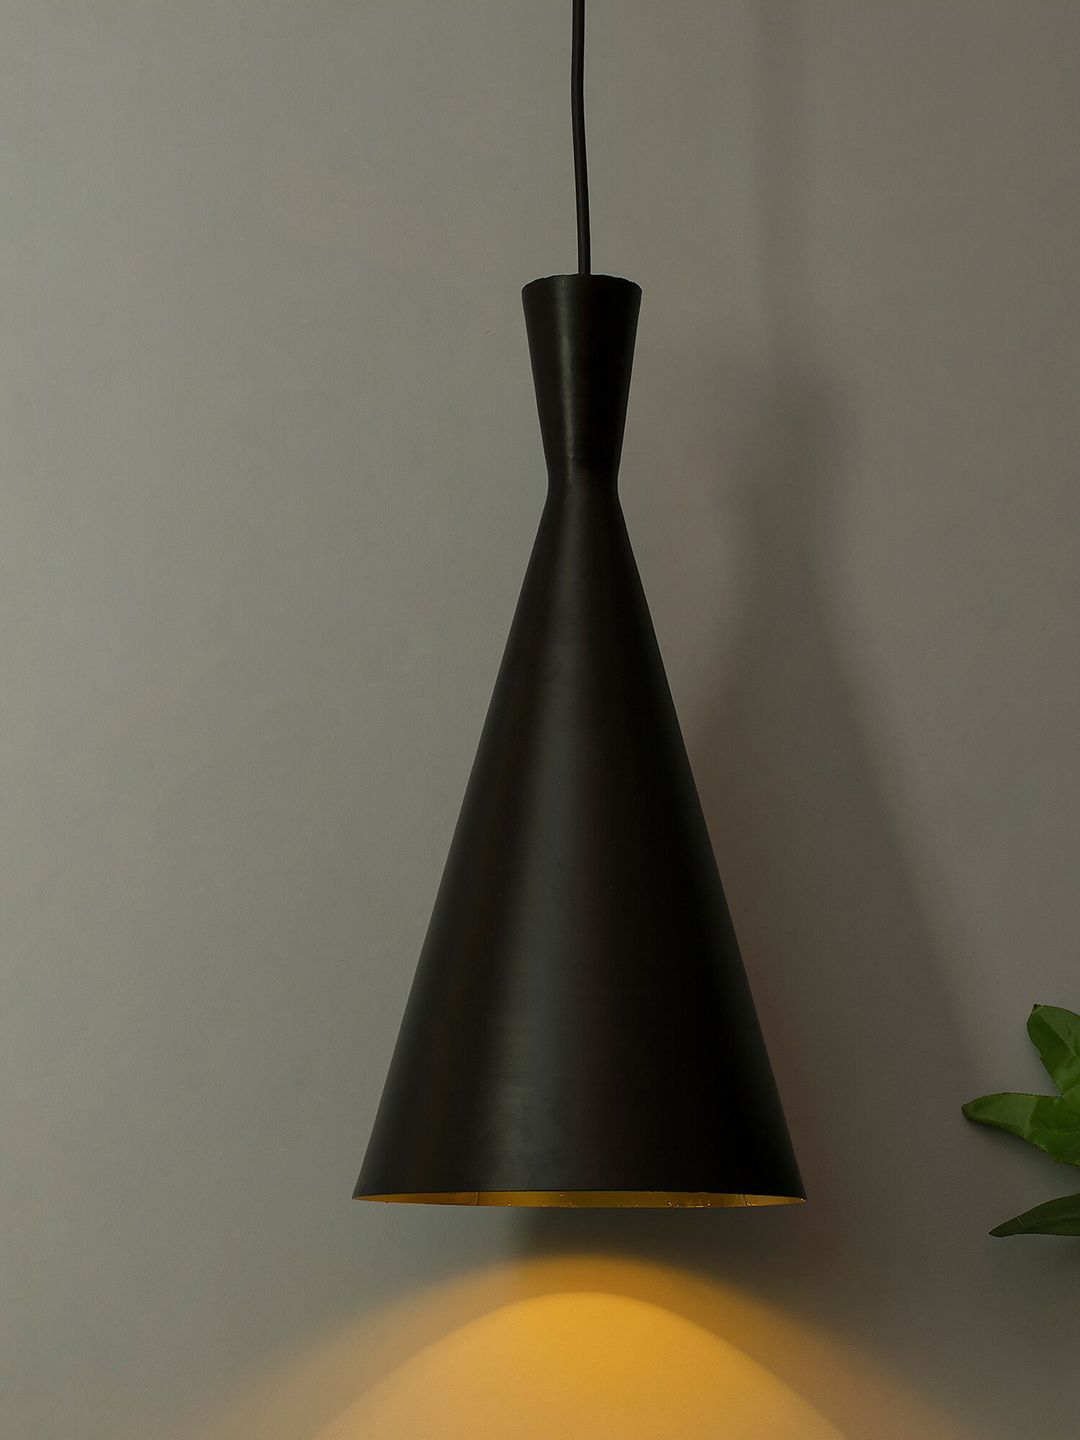 Homesake Black Metal Inverted Cone Ceiling Lamp Price in India